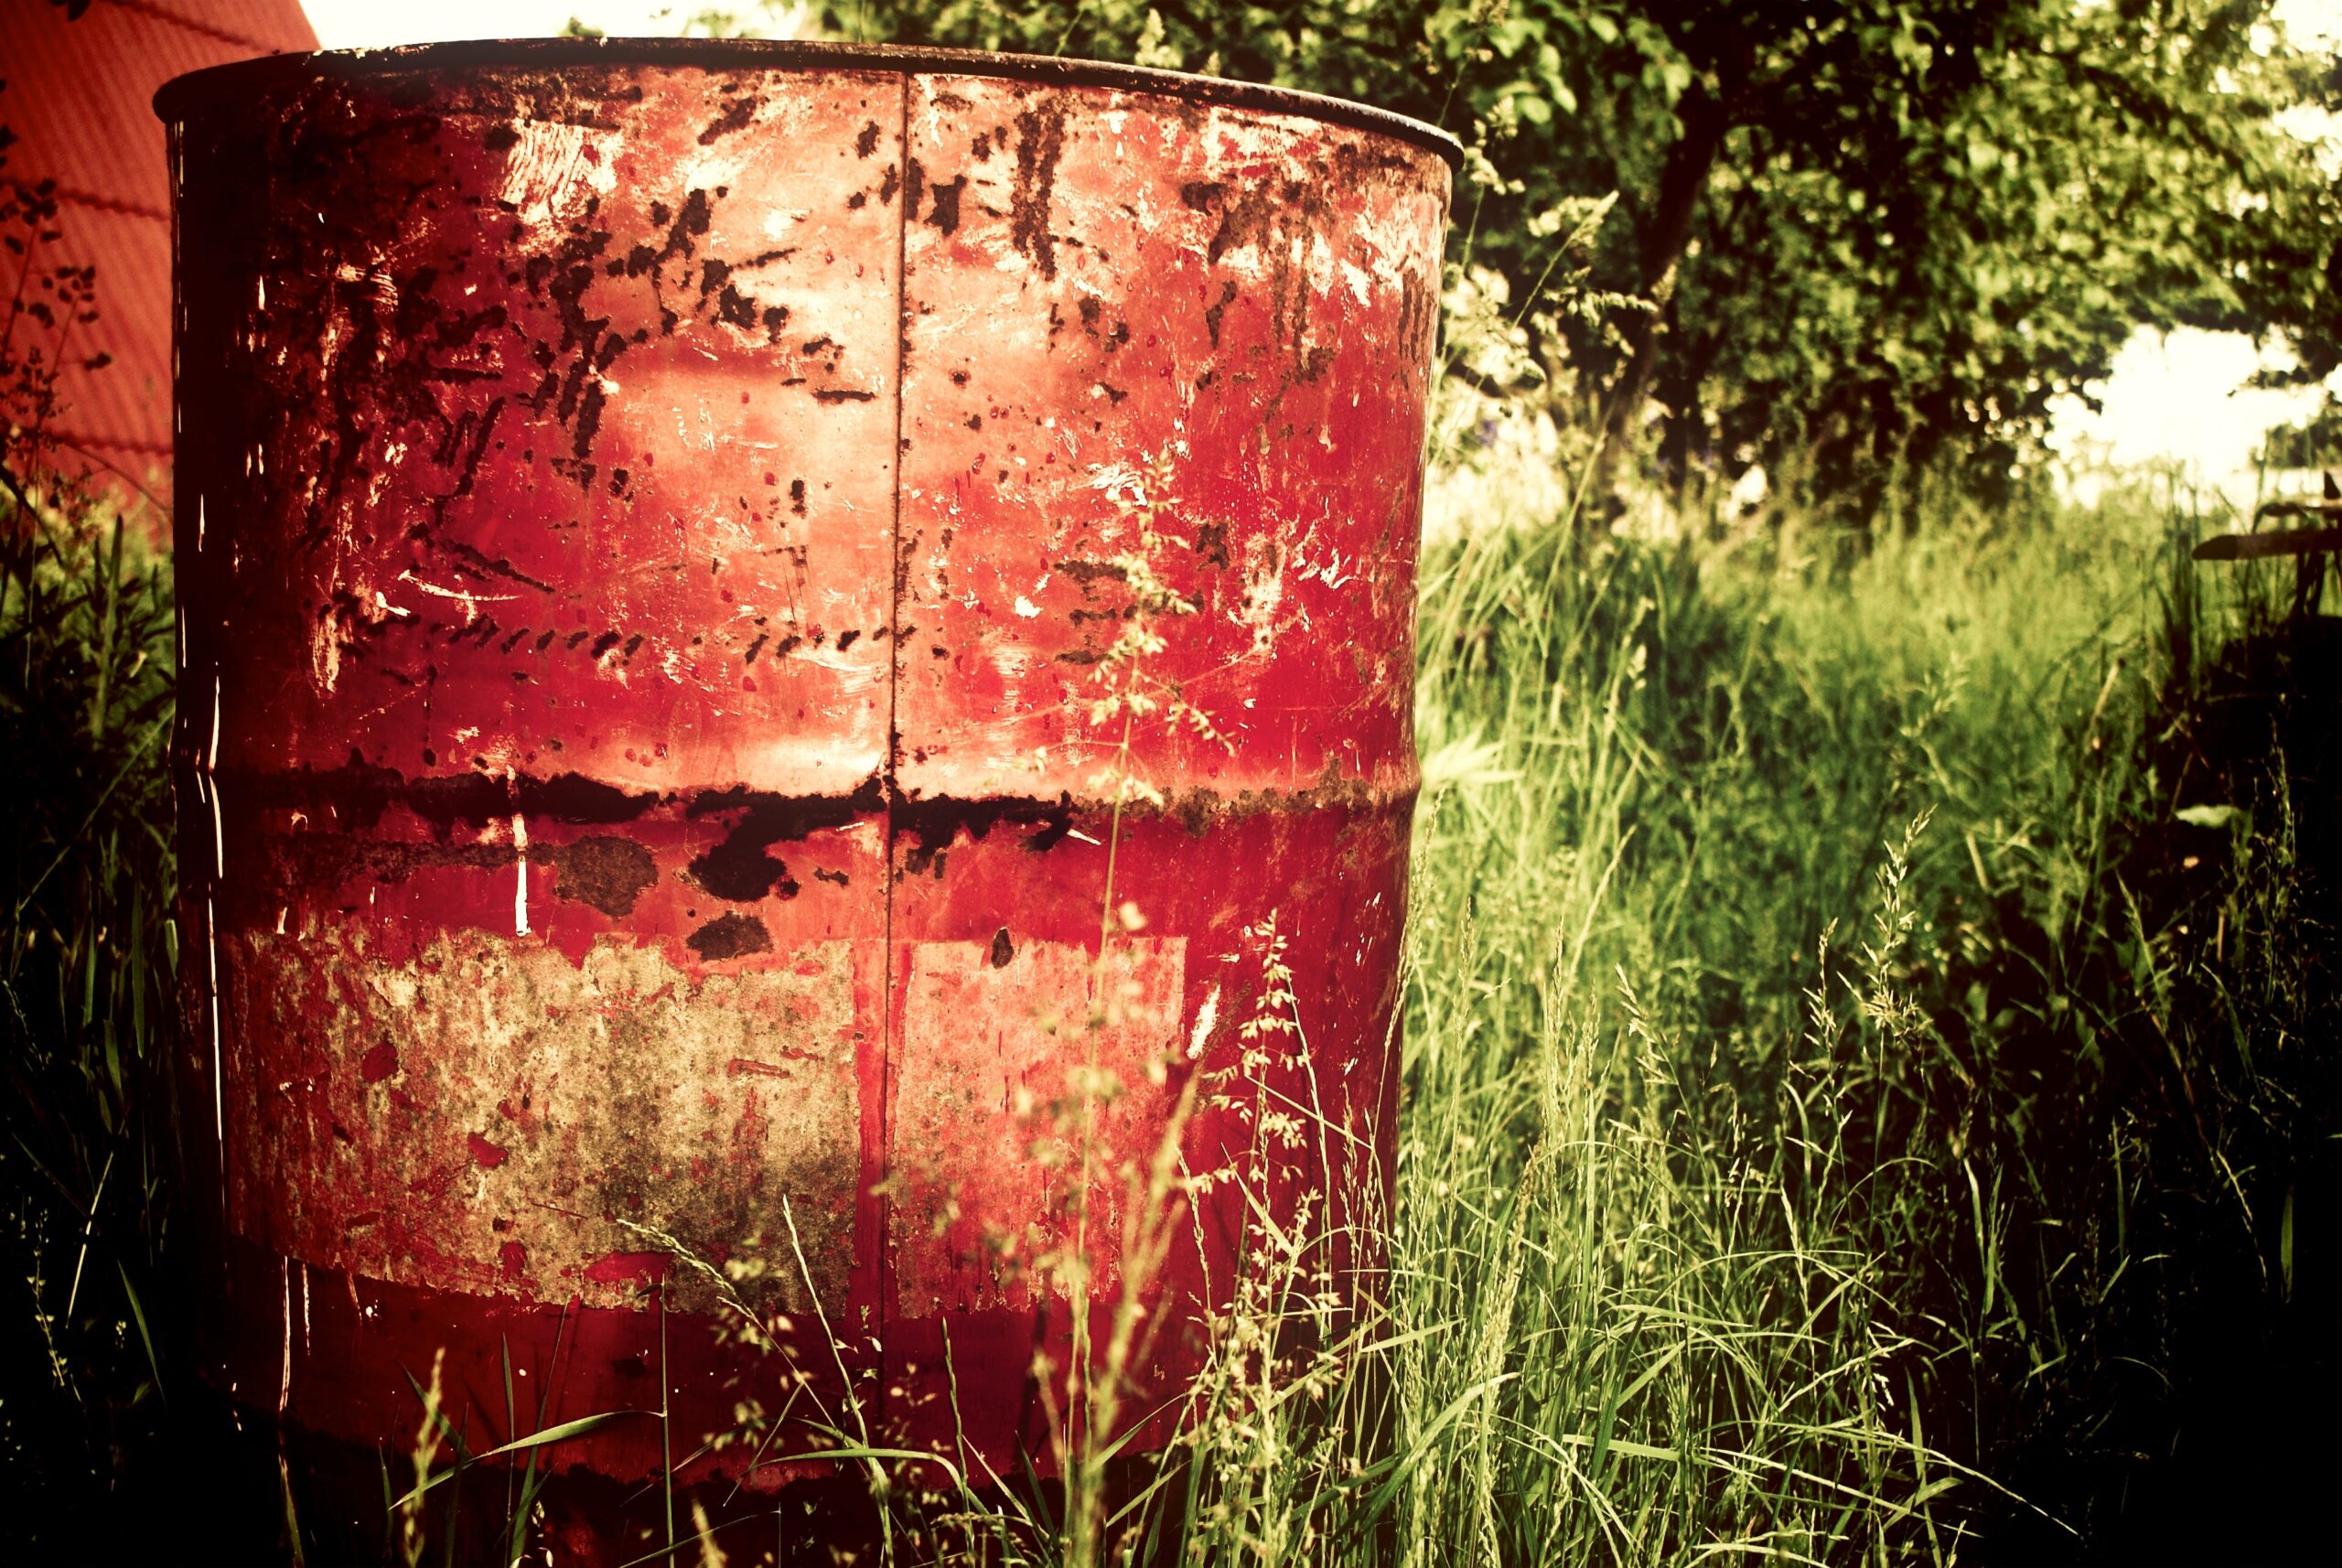 oil drum in grass.